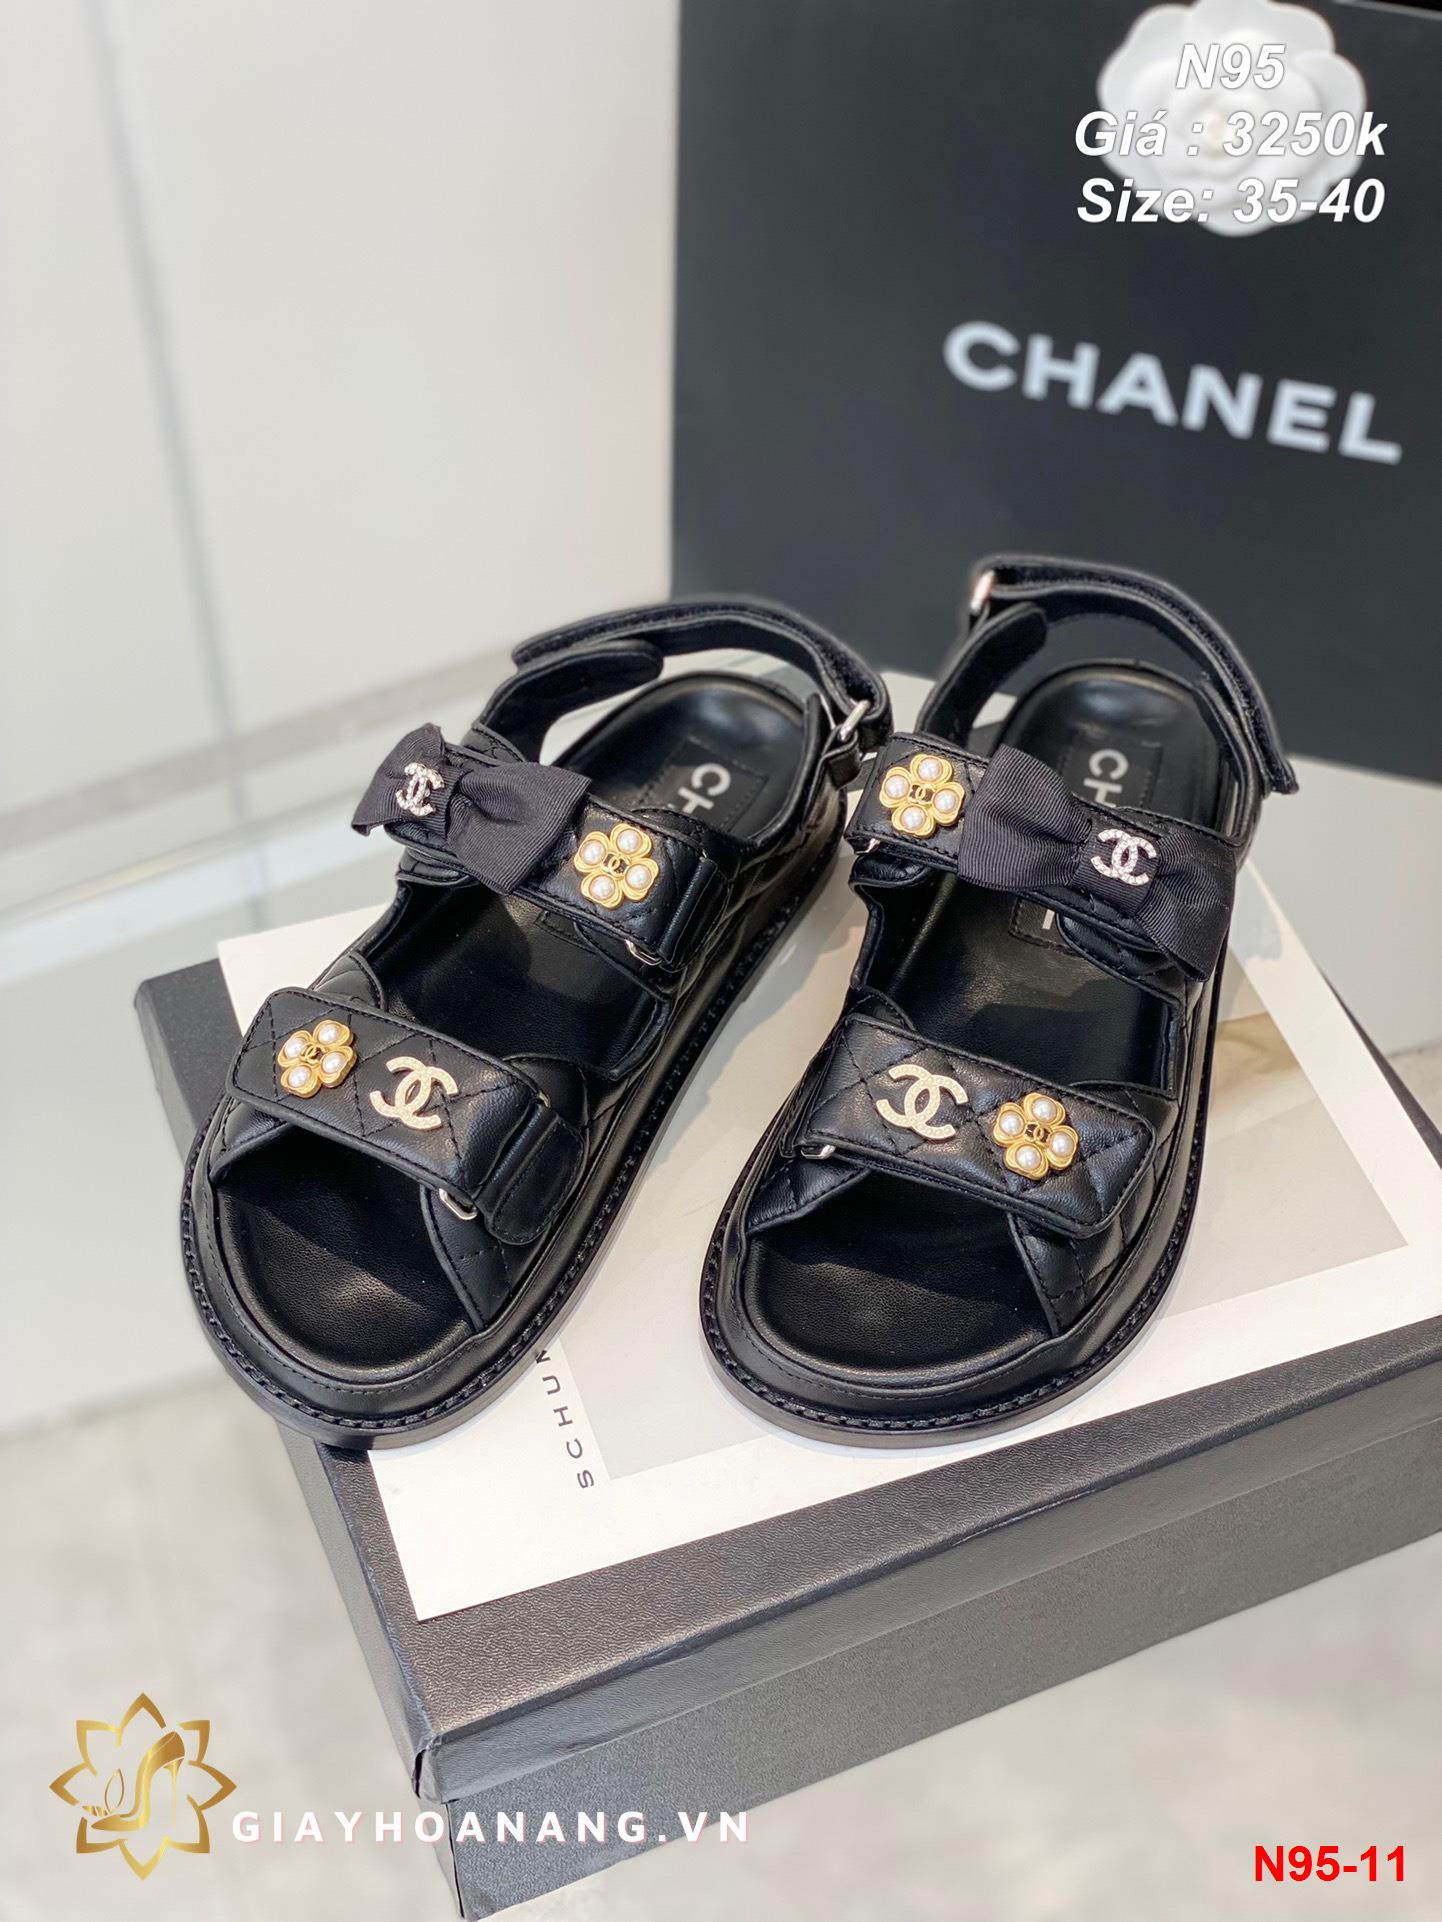 N95-11 Chanel sandal siêu cấp